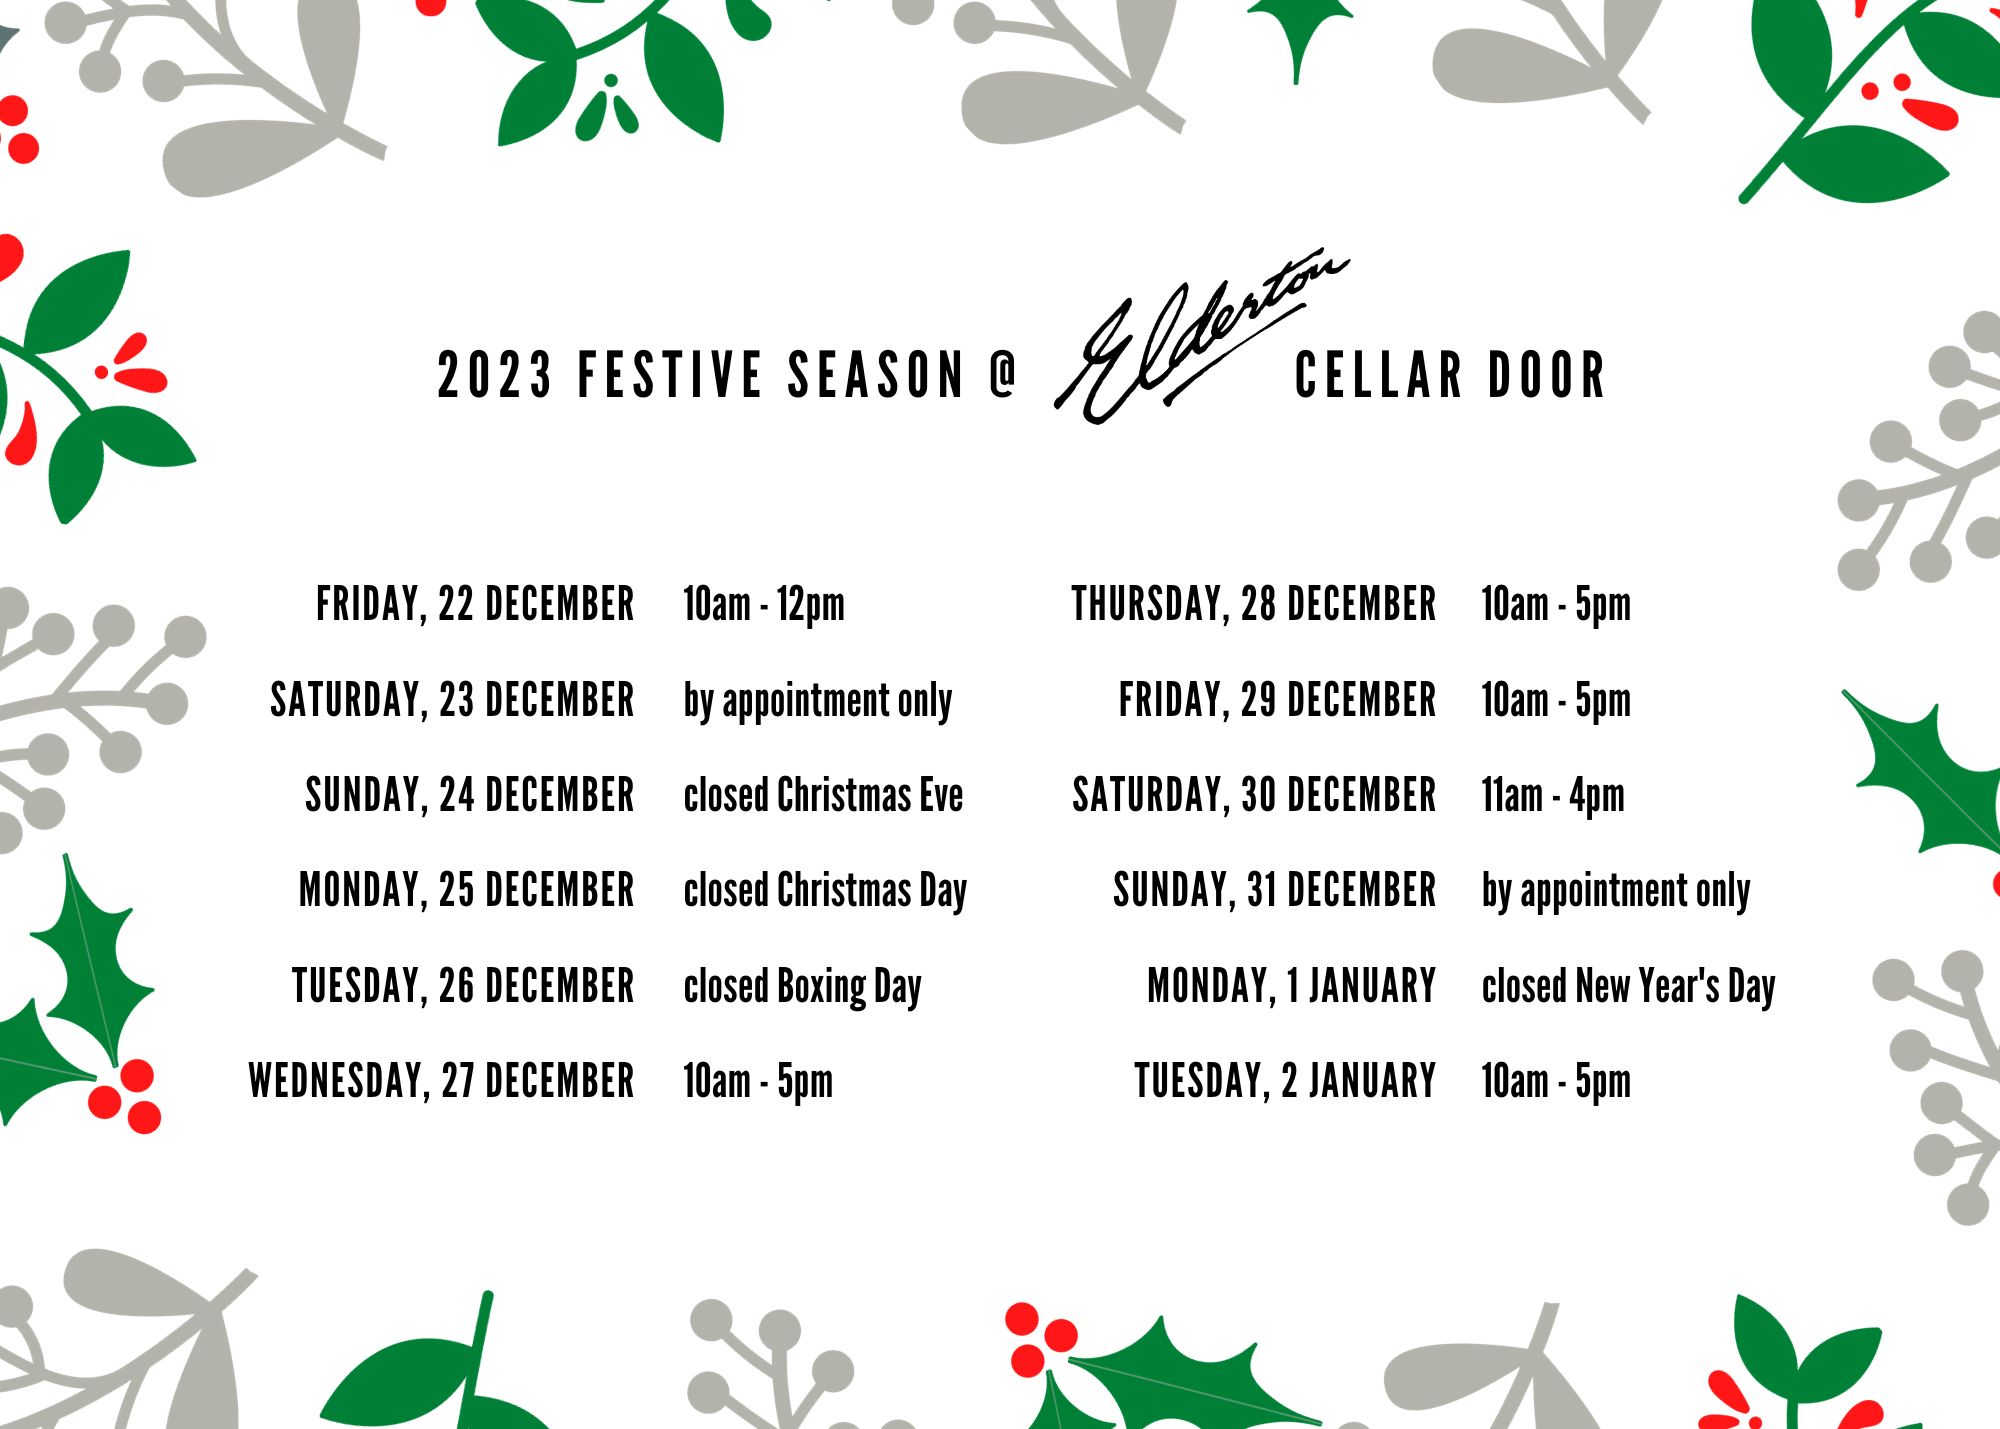 2023 festive season at cellar door